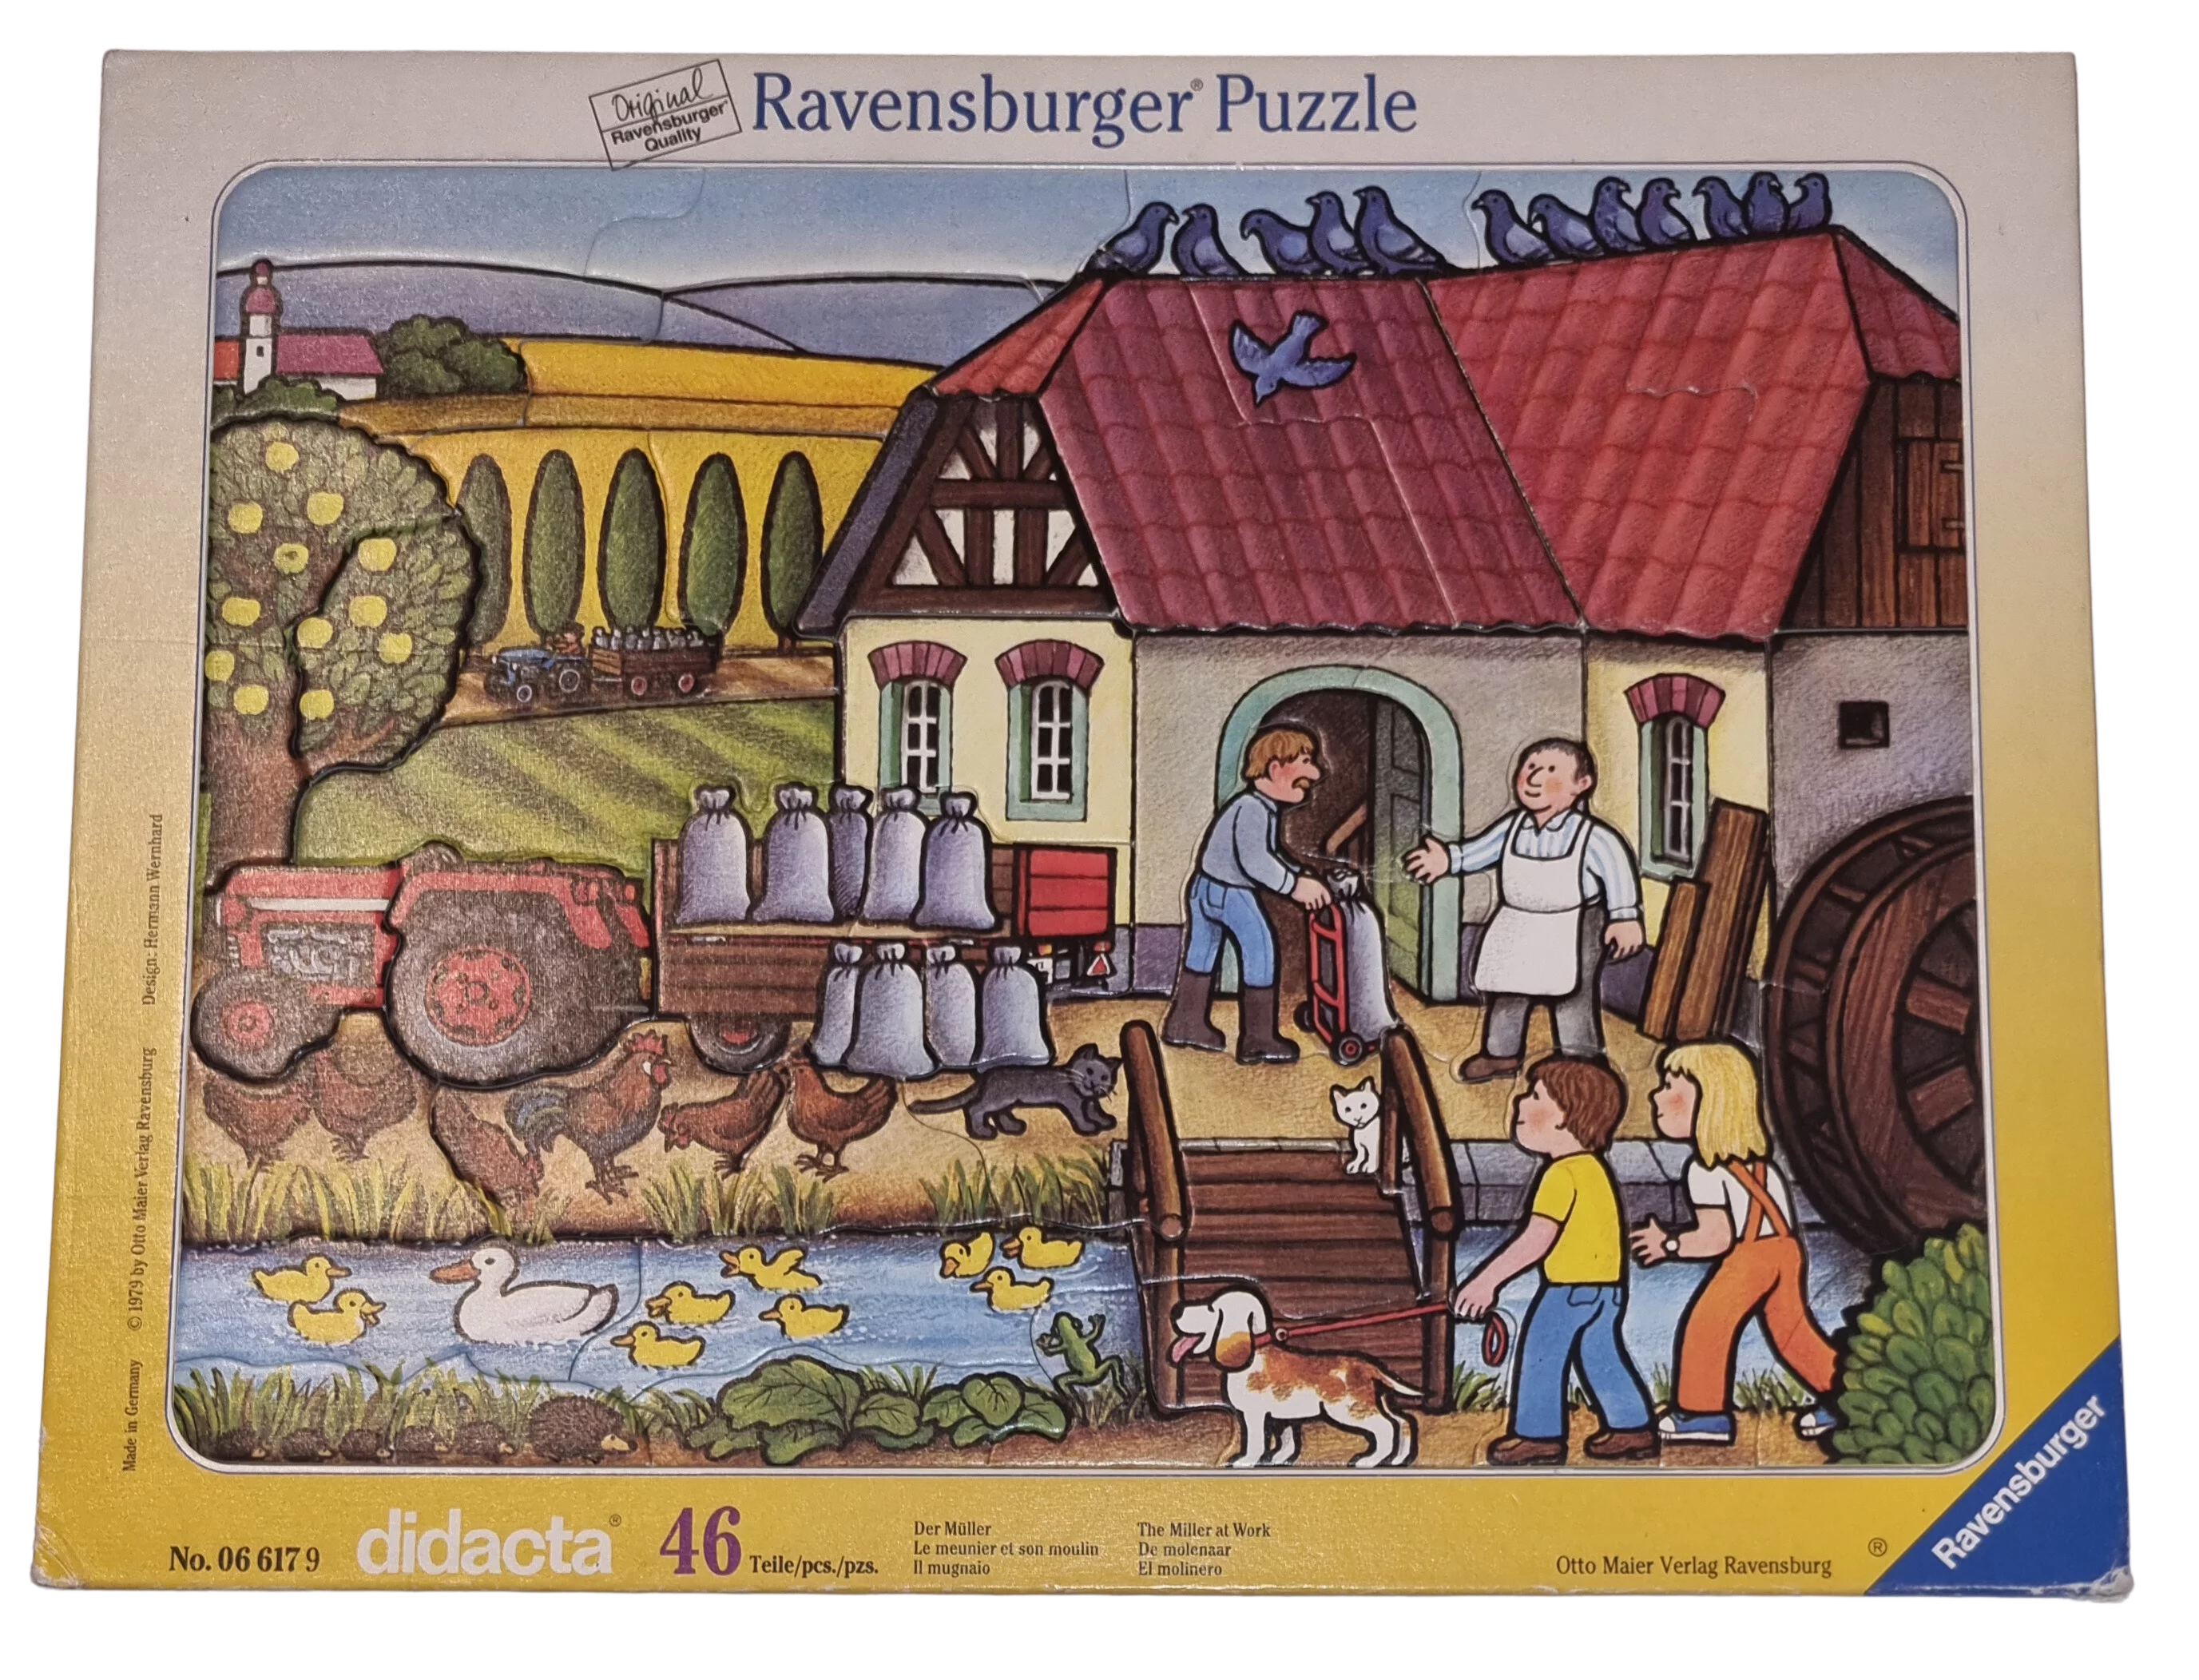 Ravensburger Rahmenpuzzle Didacta Der Müller 46 Teile 066179